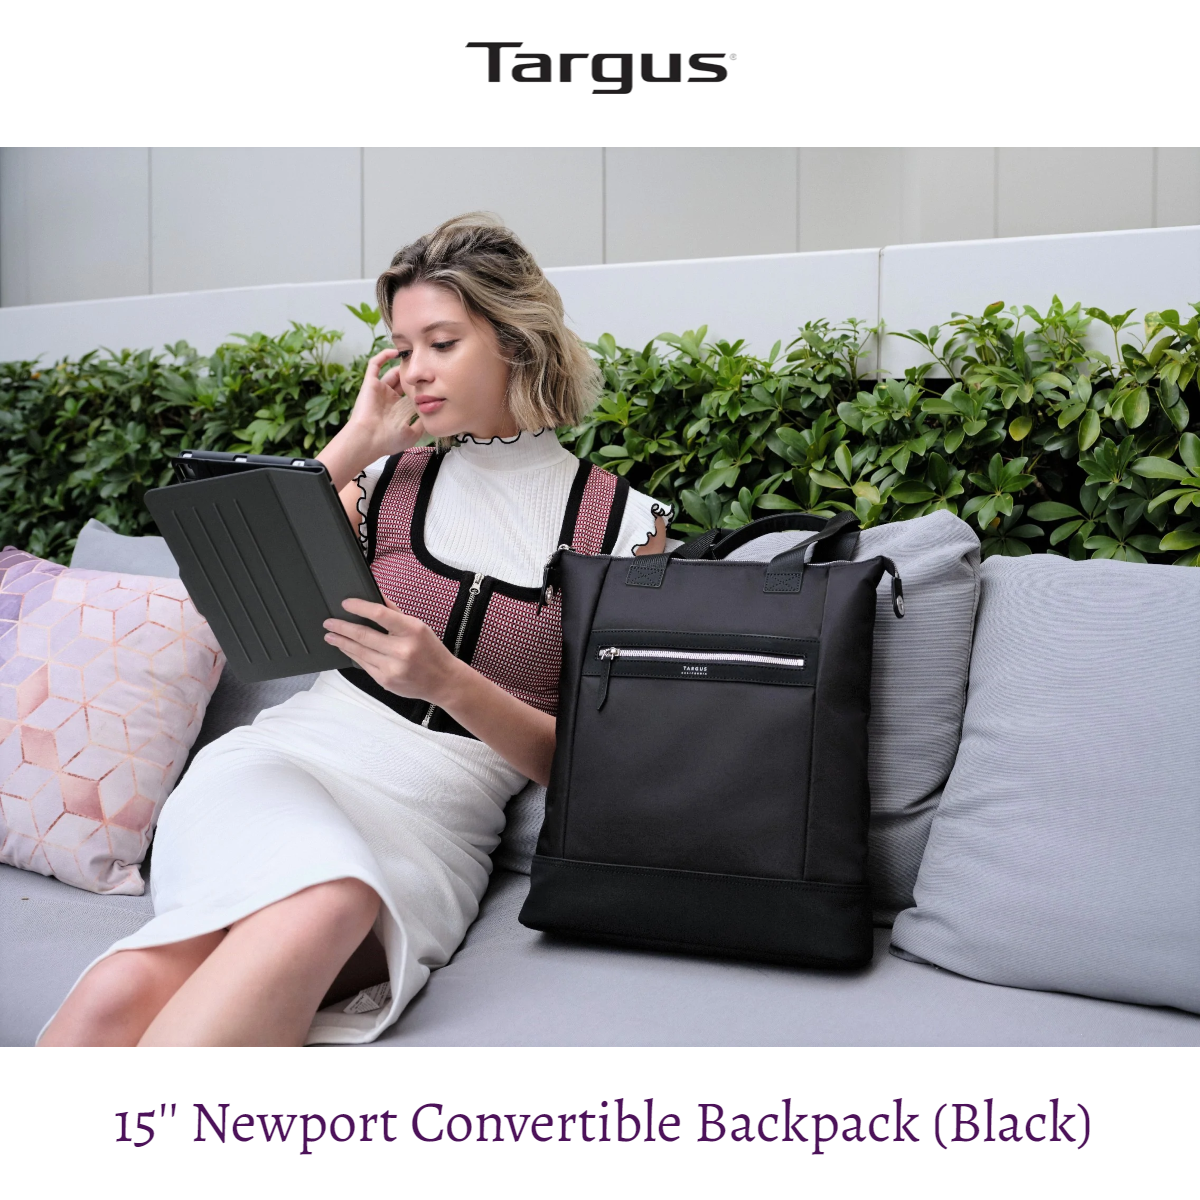 15 Newport Convertible Backpack Black